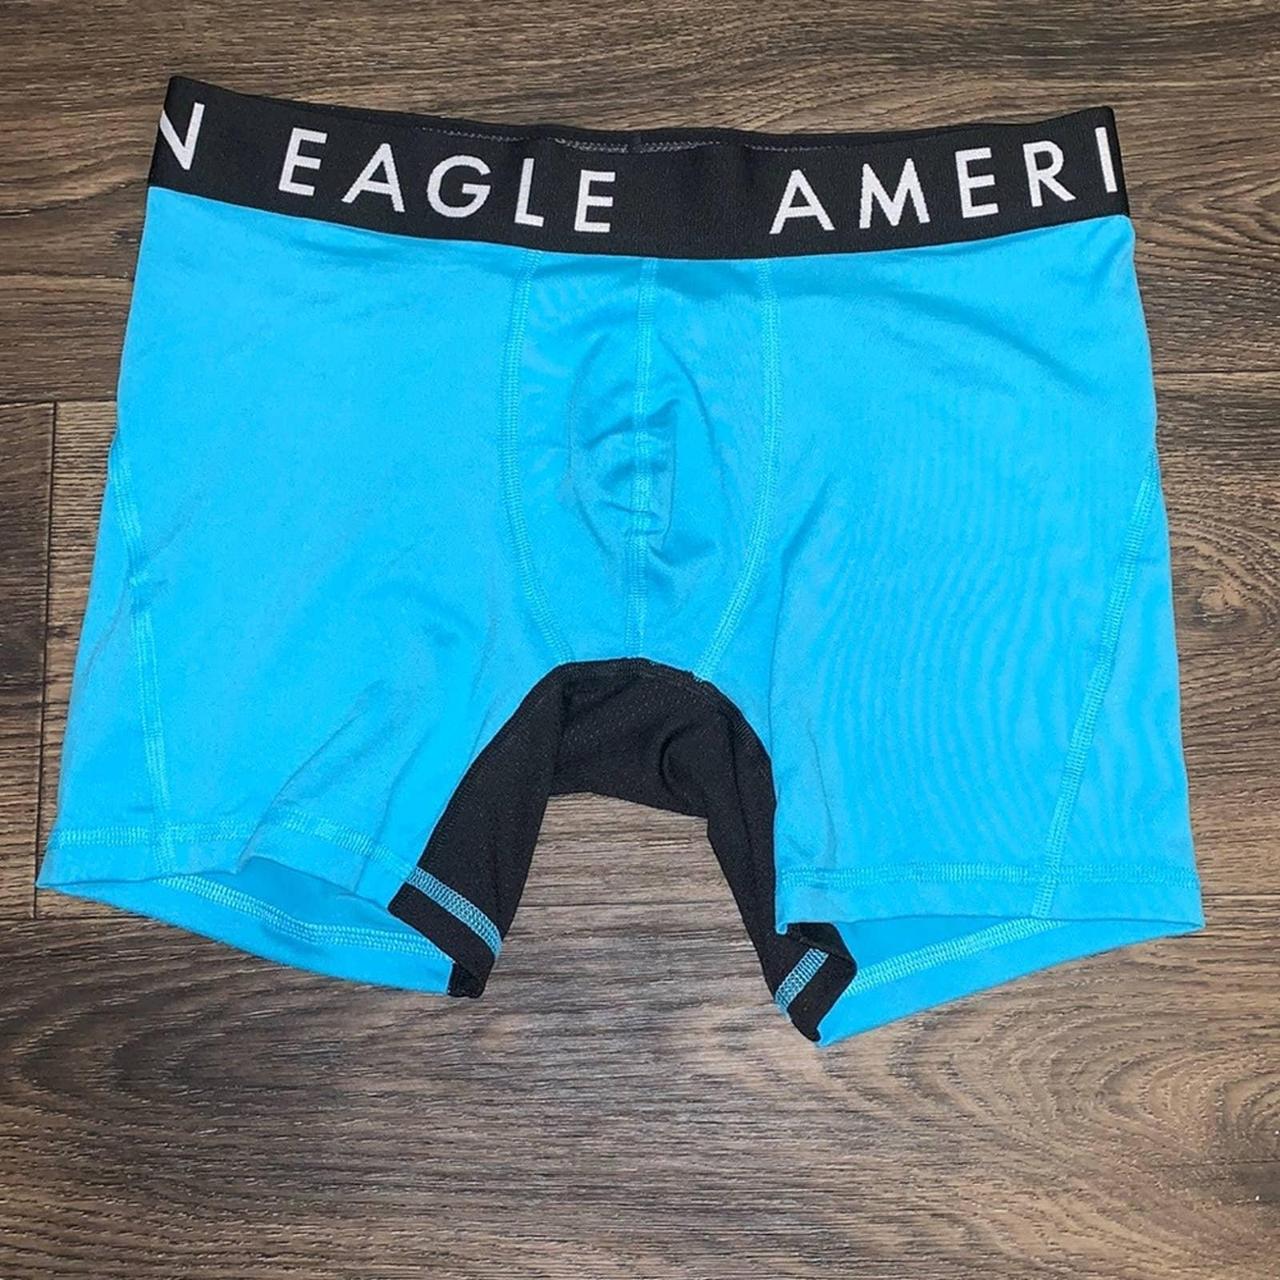 XL american eagle bird boxers #AE #boxers #underwear - Depop